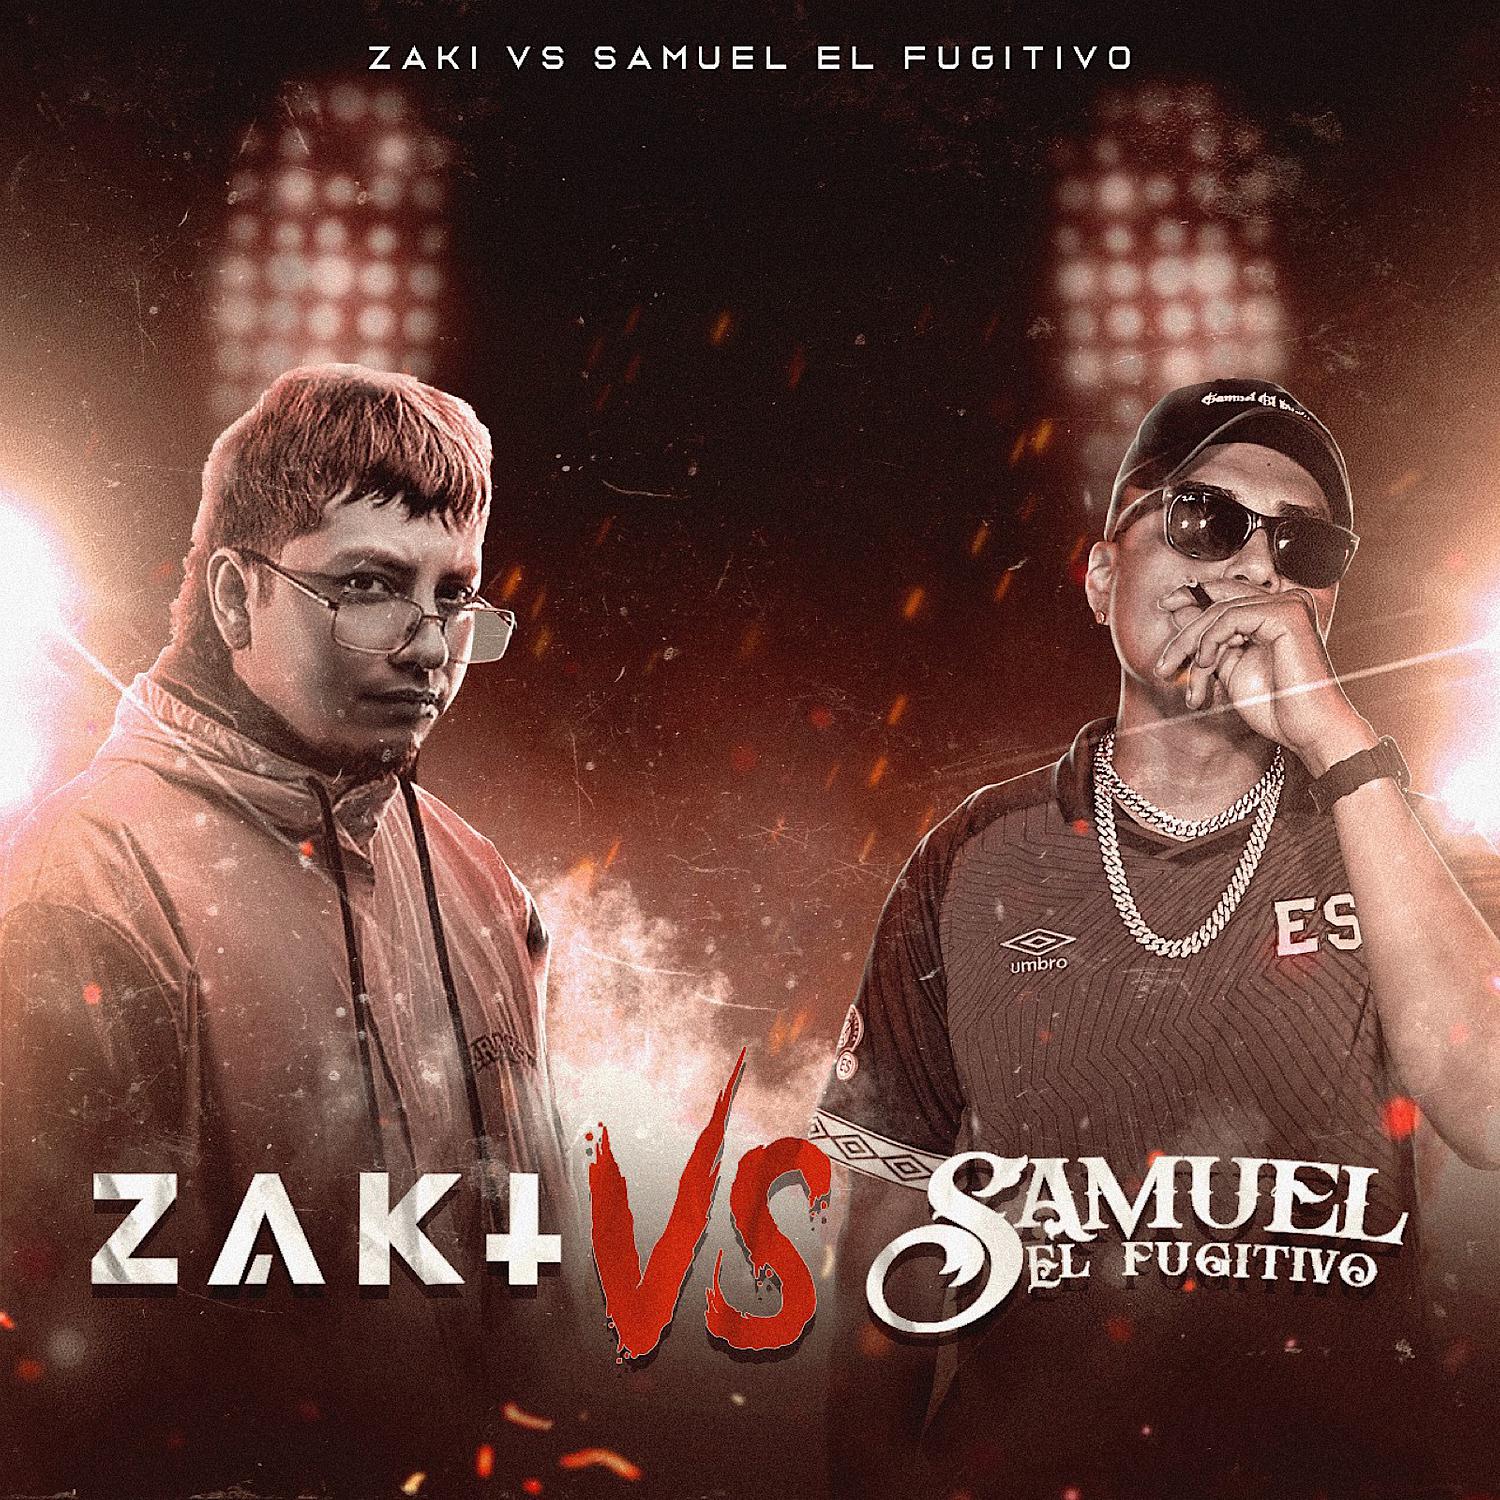 Samuel El Fugitivo - Zaki vs Samuel El Fugitivo